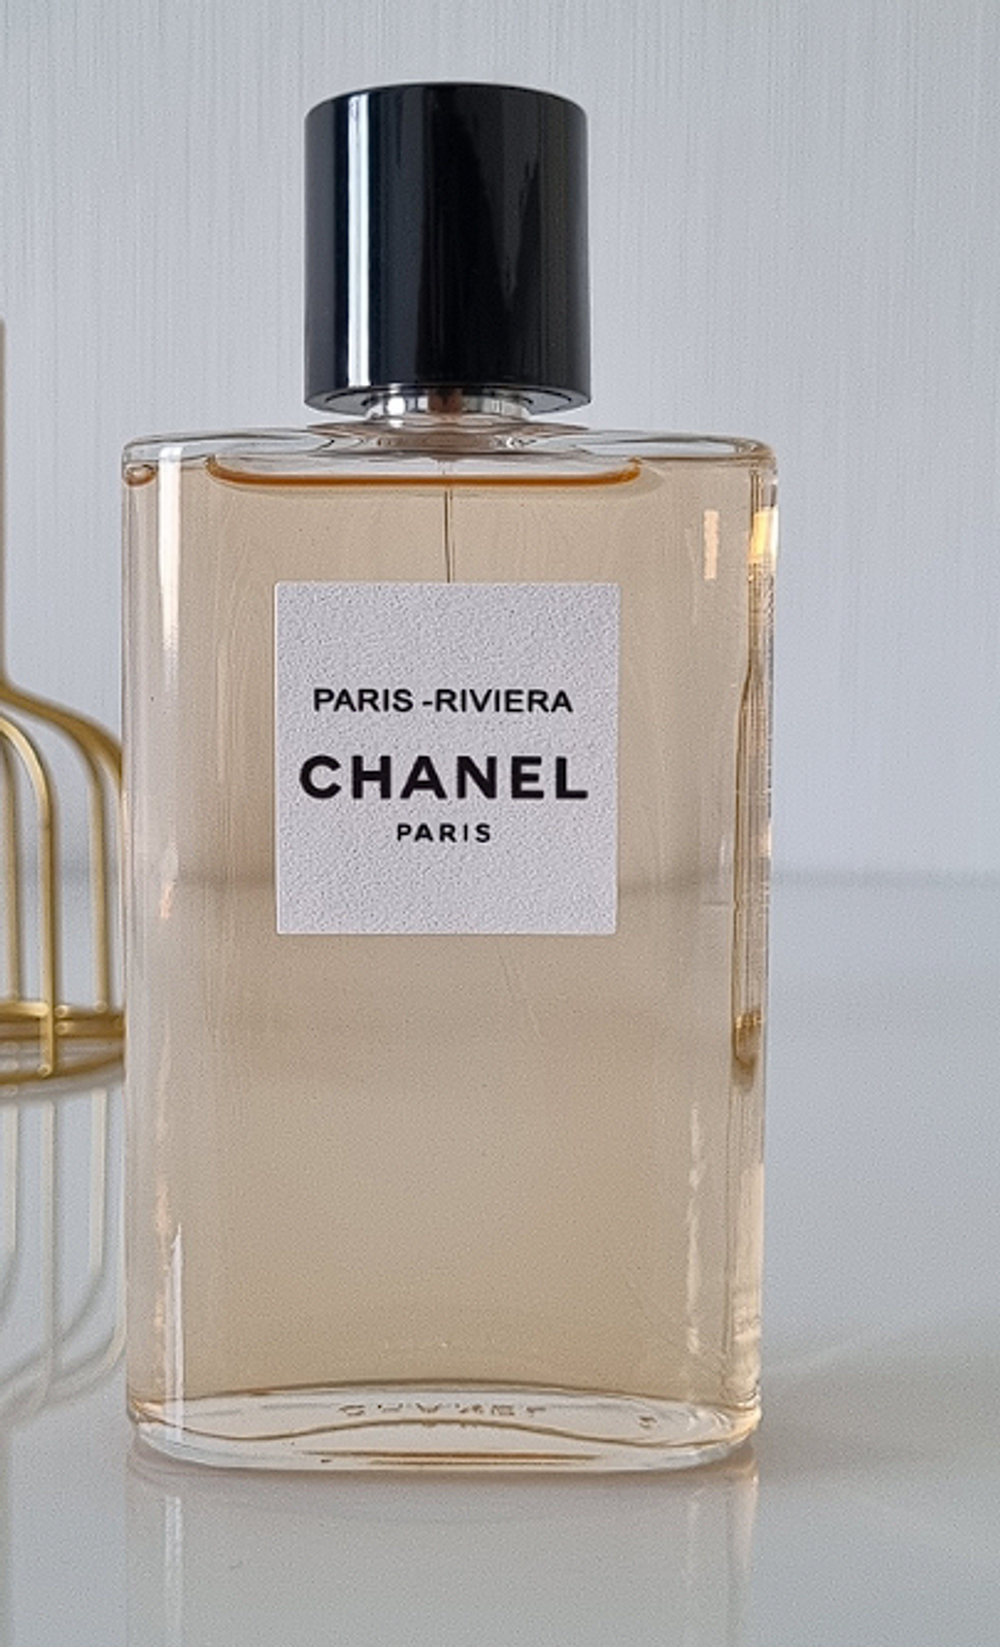 Chanel Paris – Riviera 125ml (duty free парфюмерия)